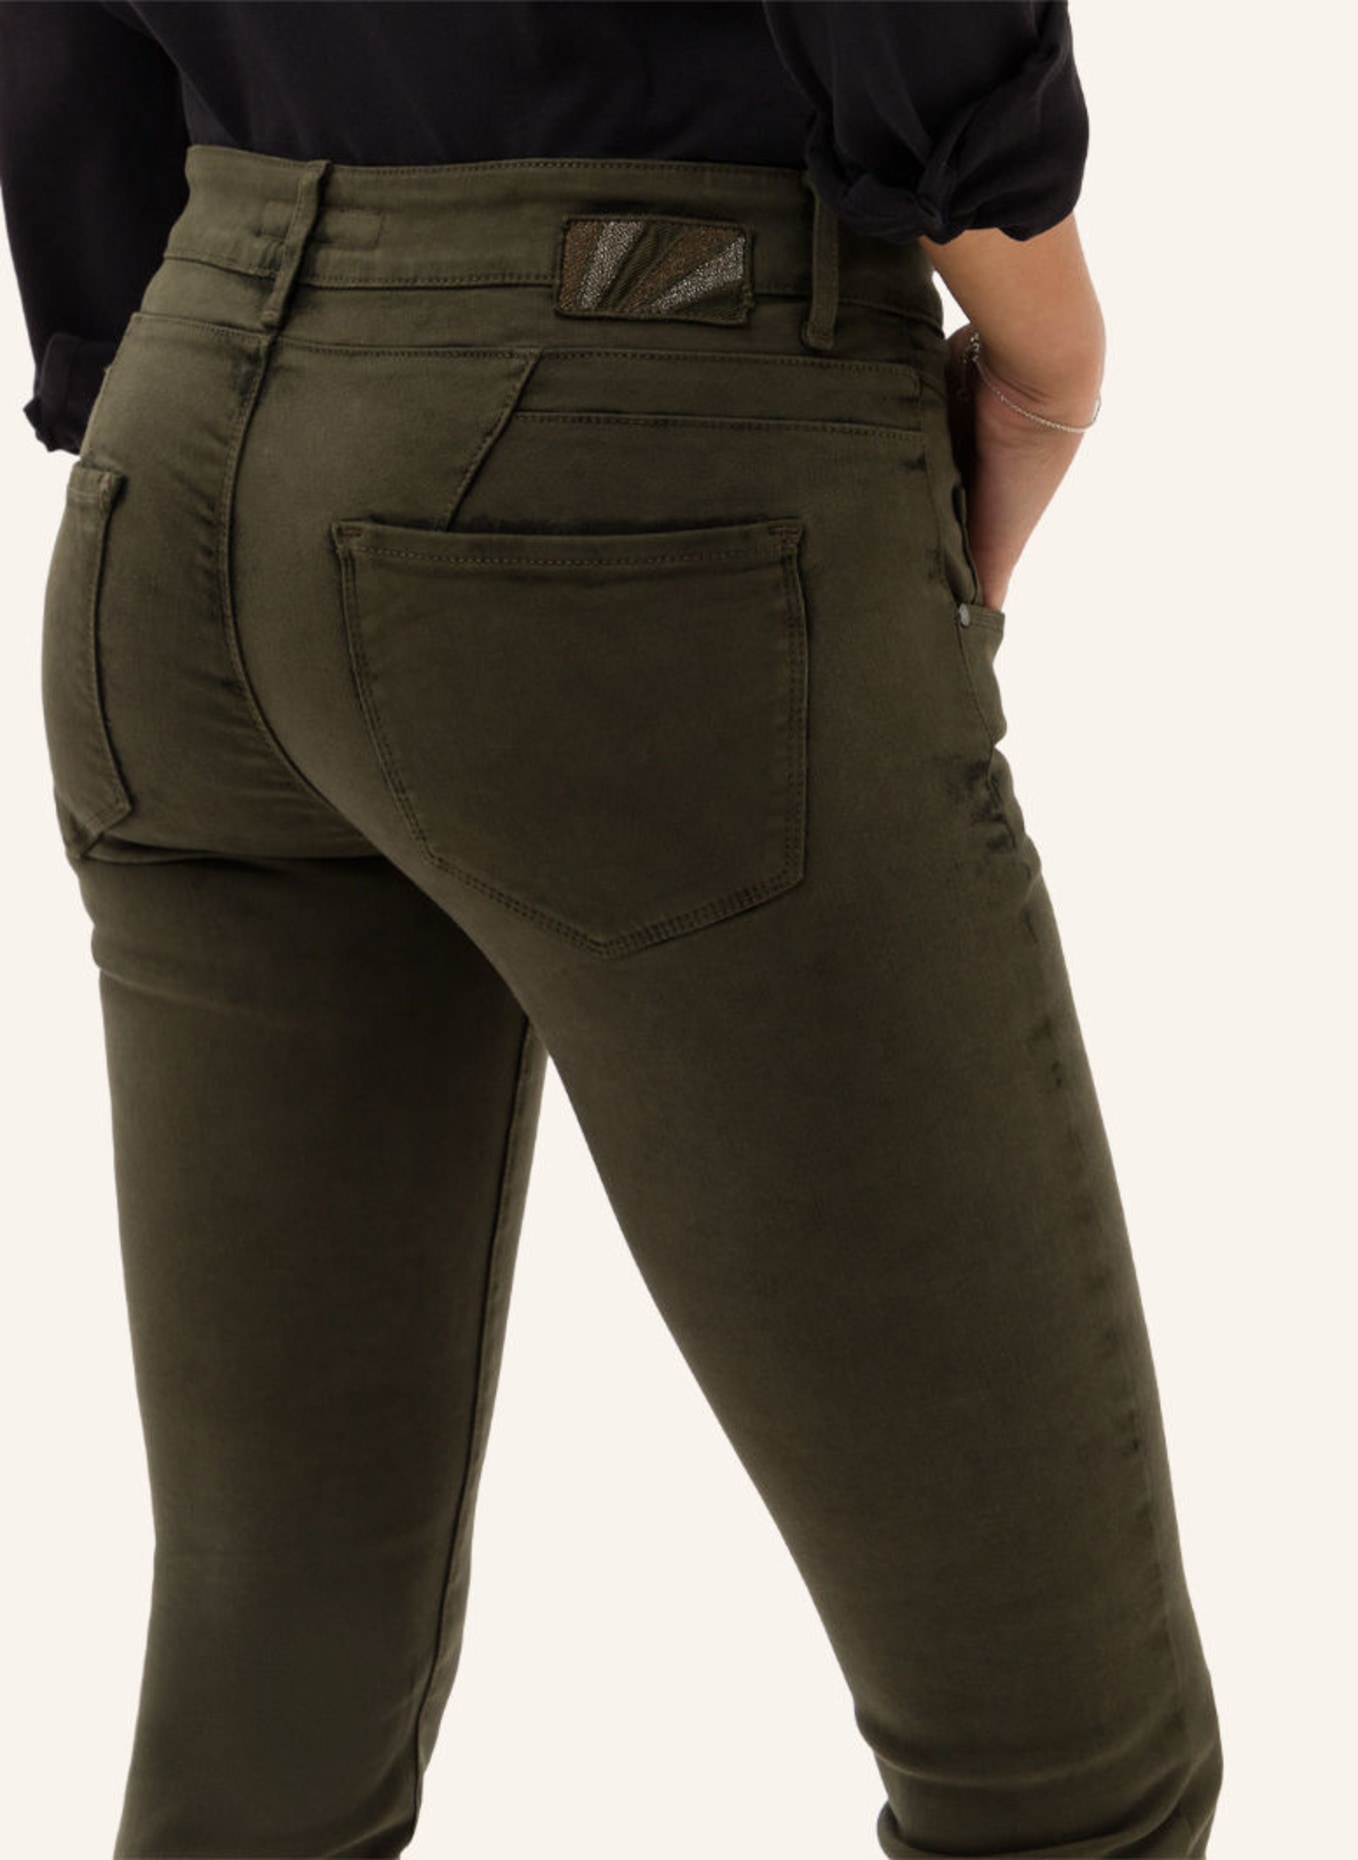 ANA Jeans in dunkelgrün STYLE BRAX